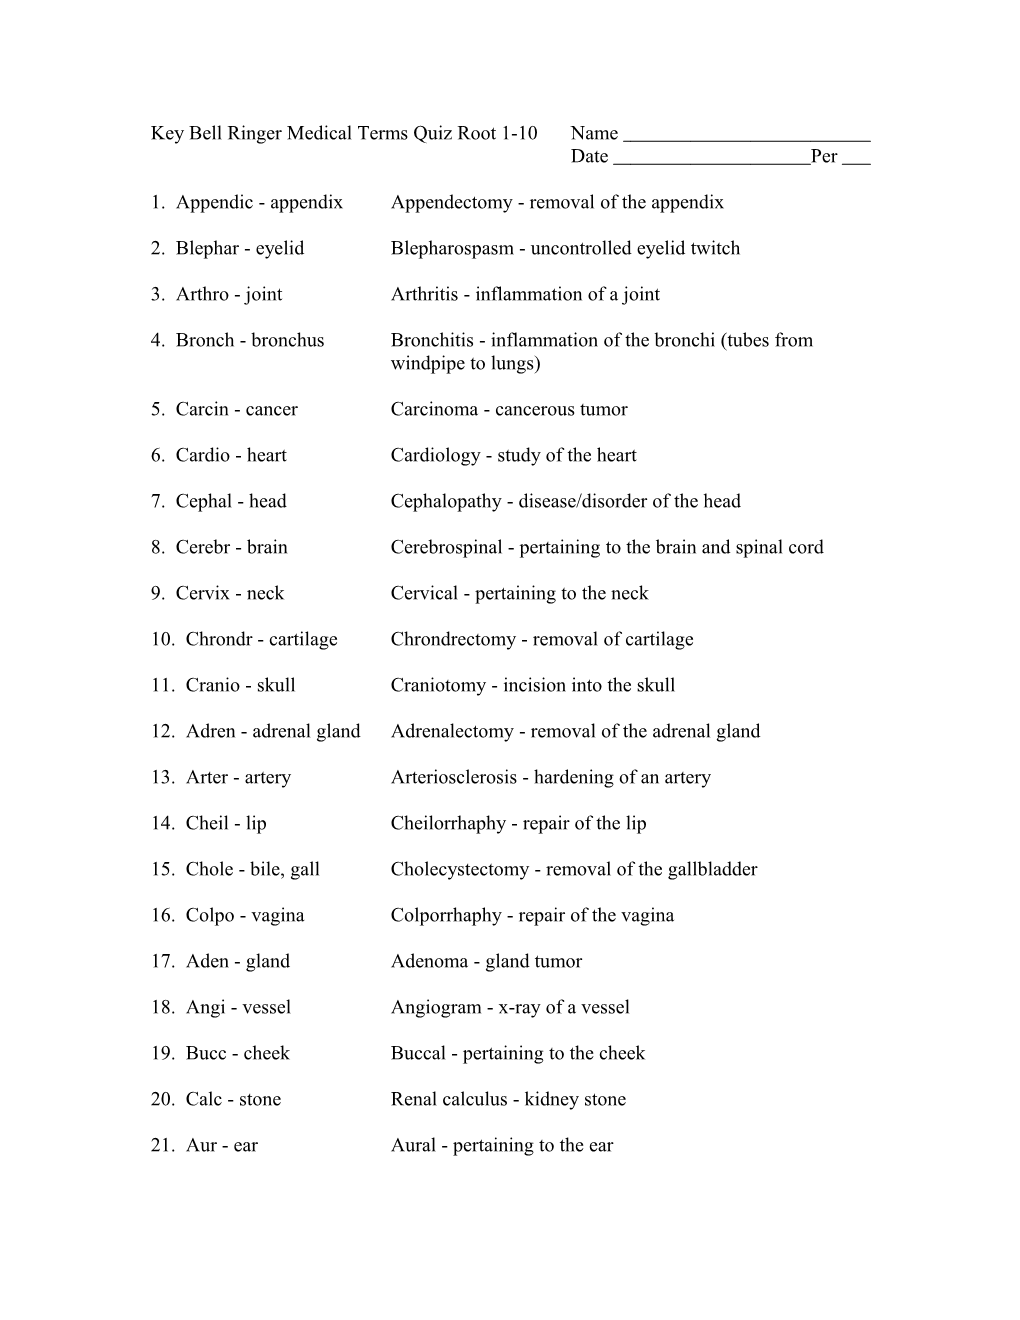 Key Bell Ringer Medical Terms Quiz Root 1-10